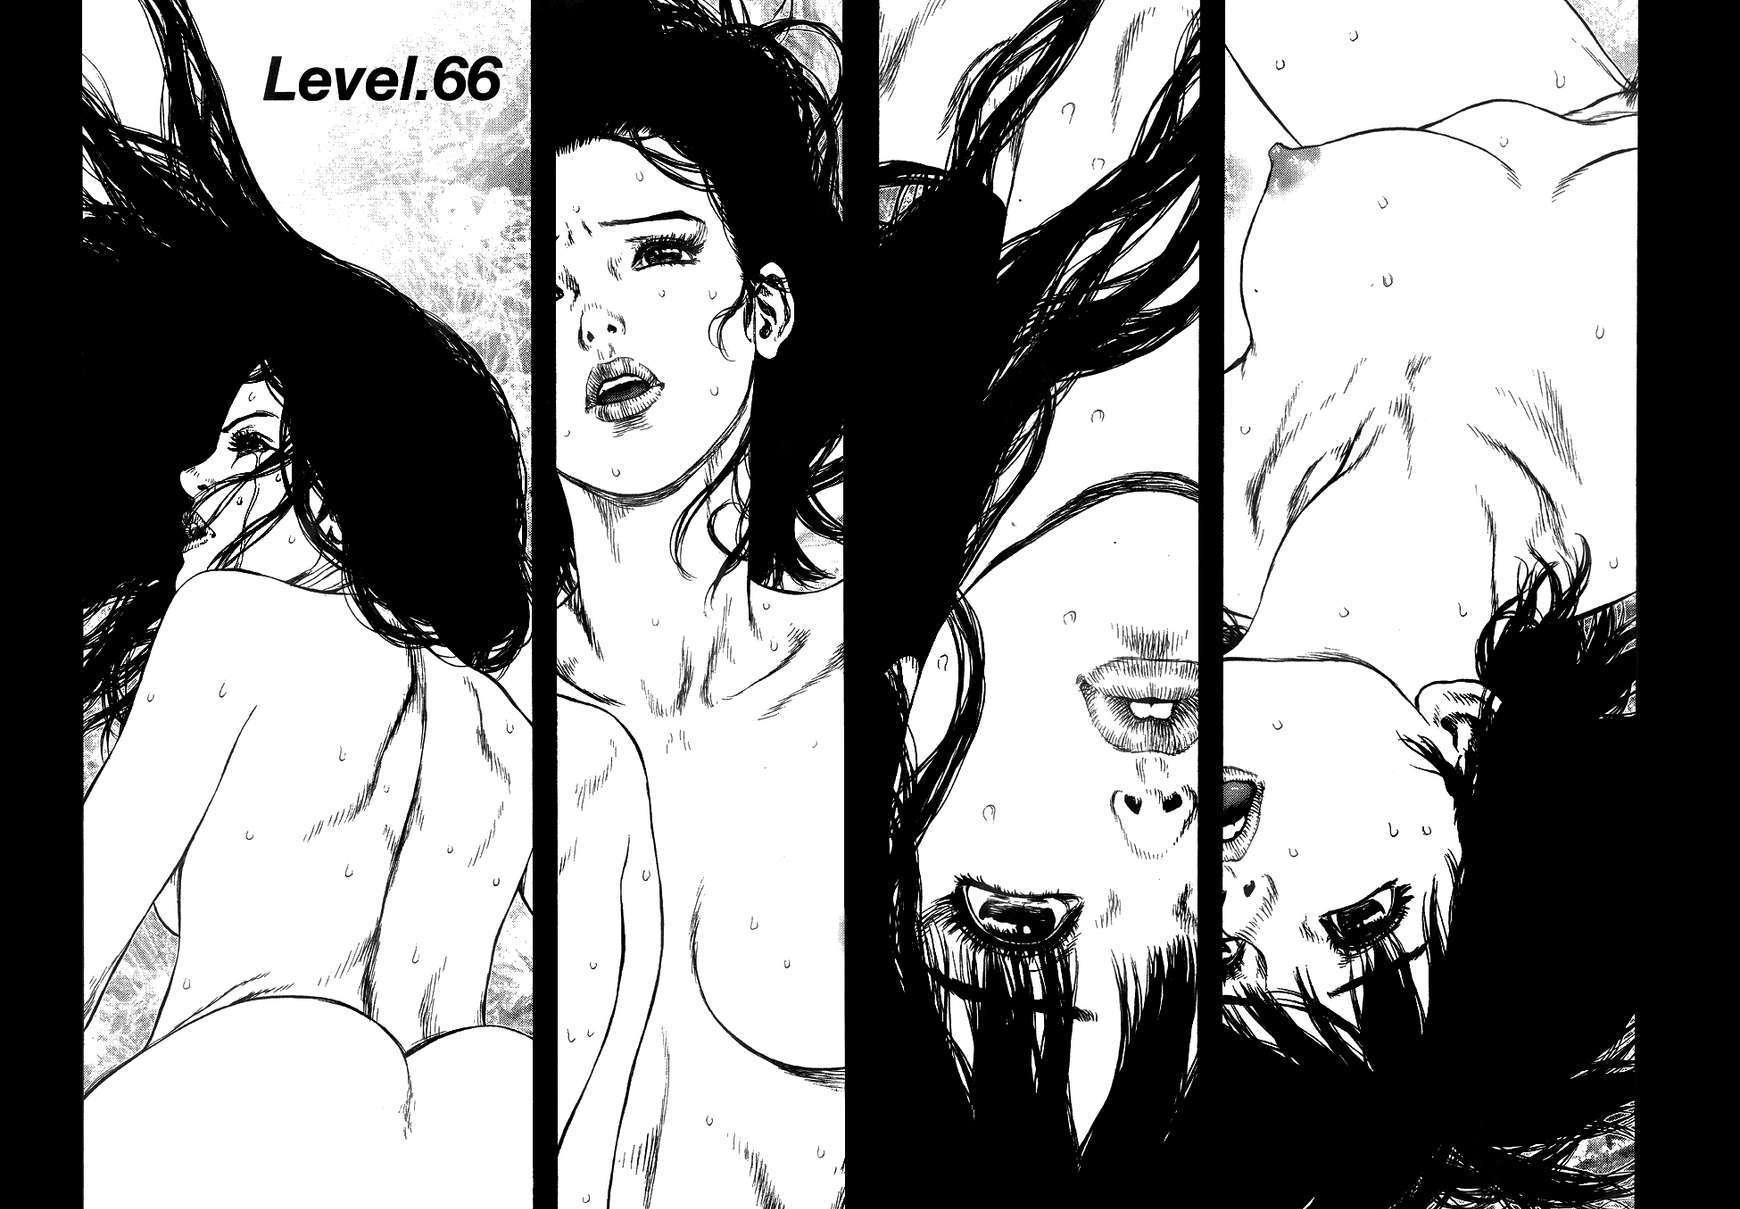 Sun Ken Rock Chapter 66 : Level 66 - Picture 3